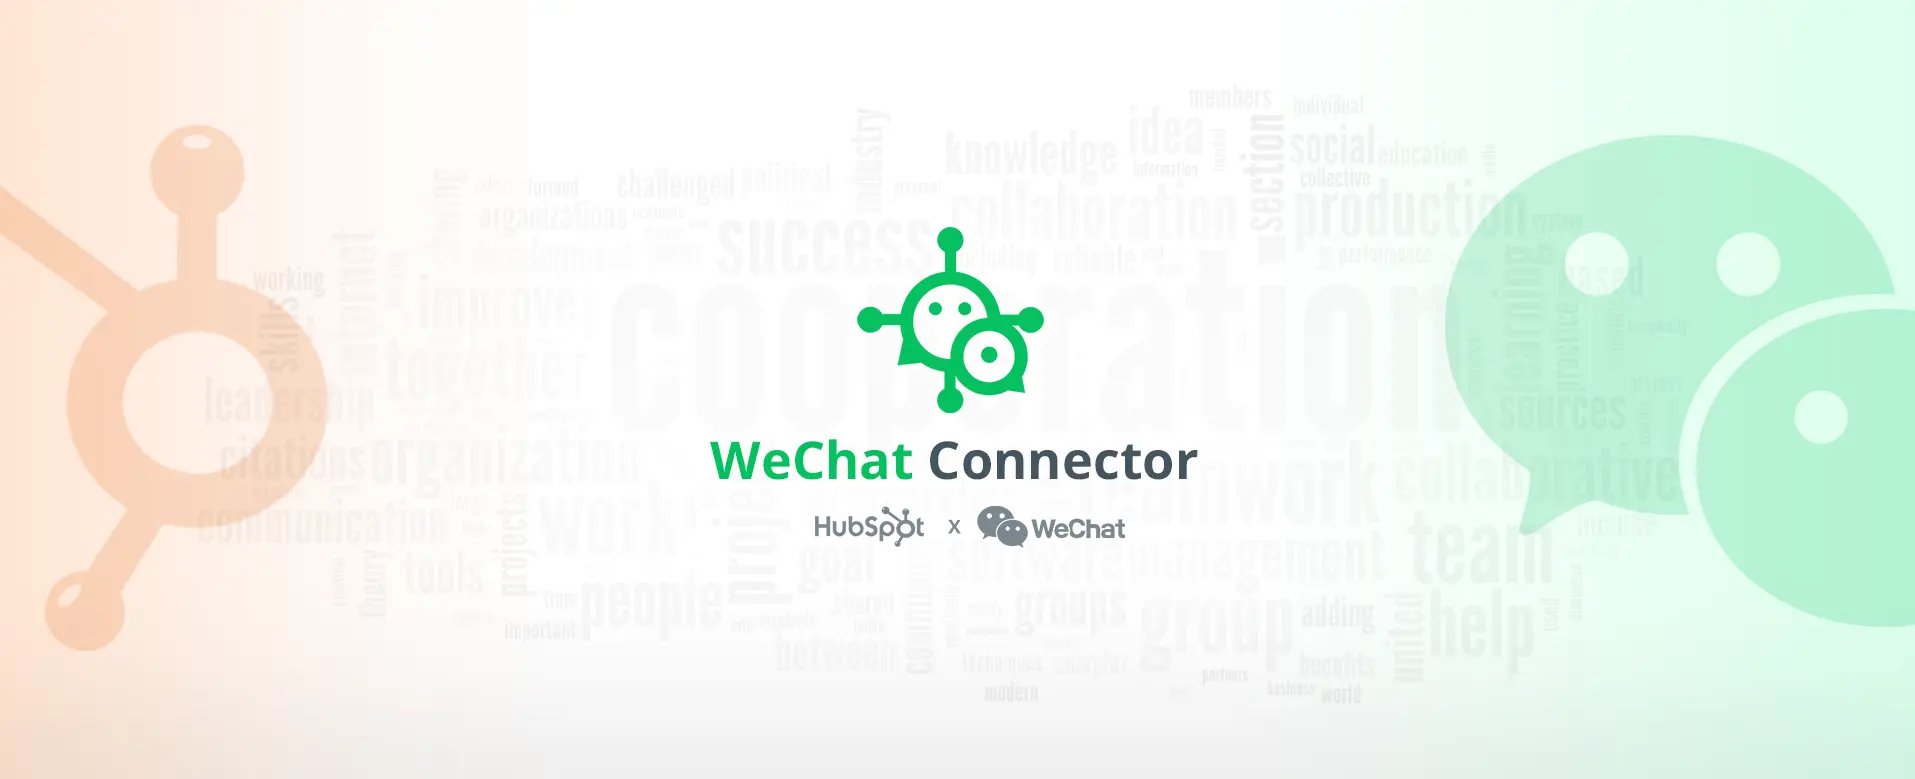 HubSpot WeChat Connector